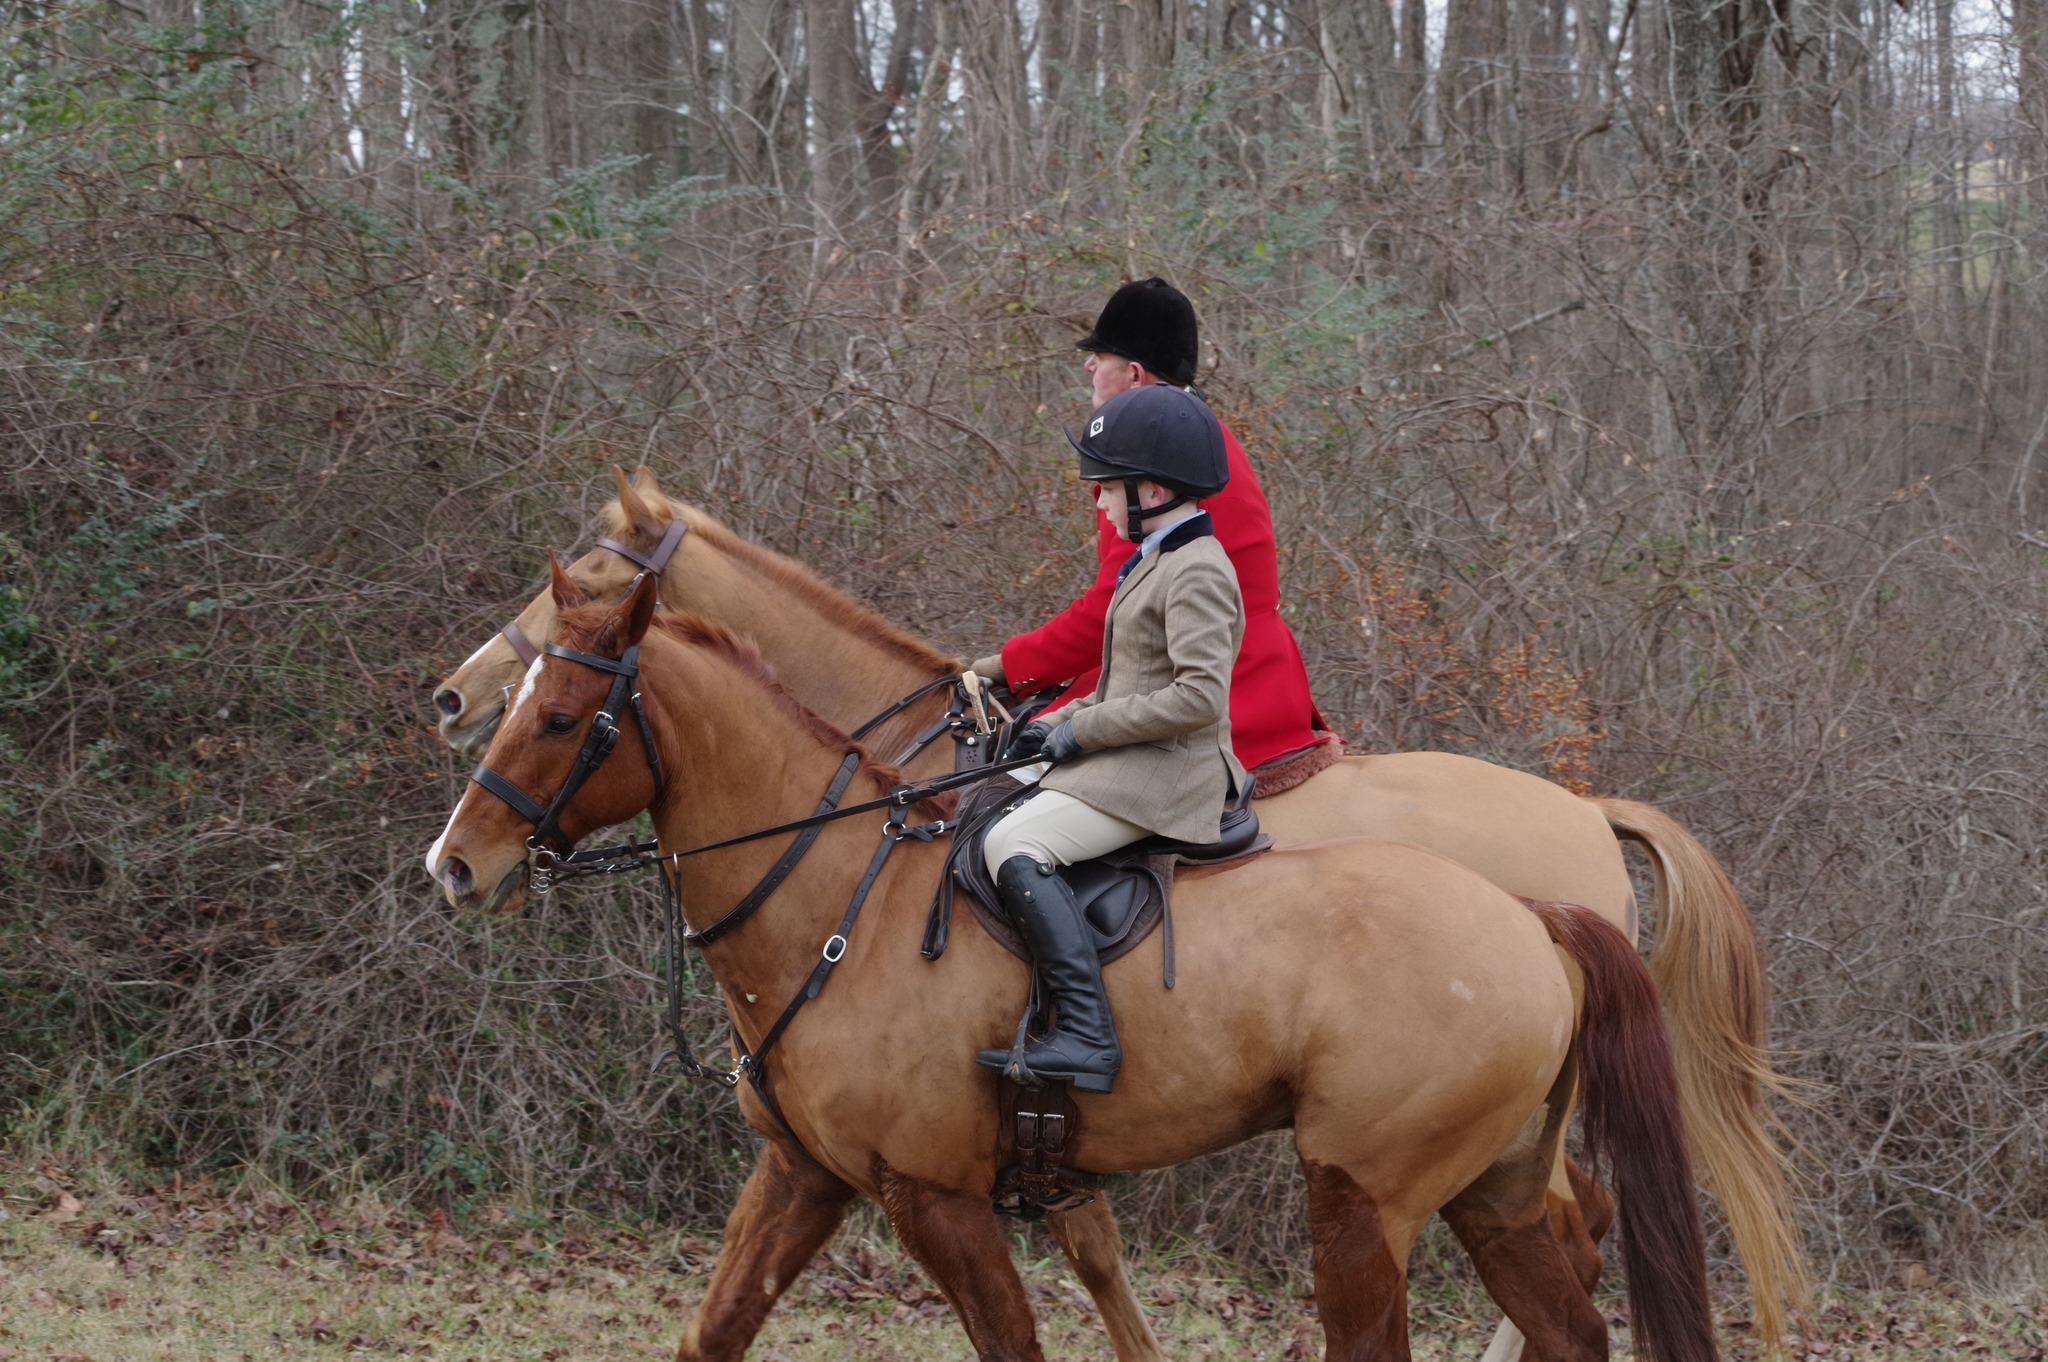 huntsman and junior rider on horses